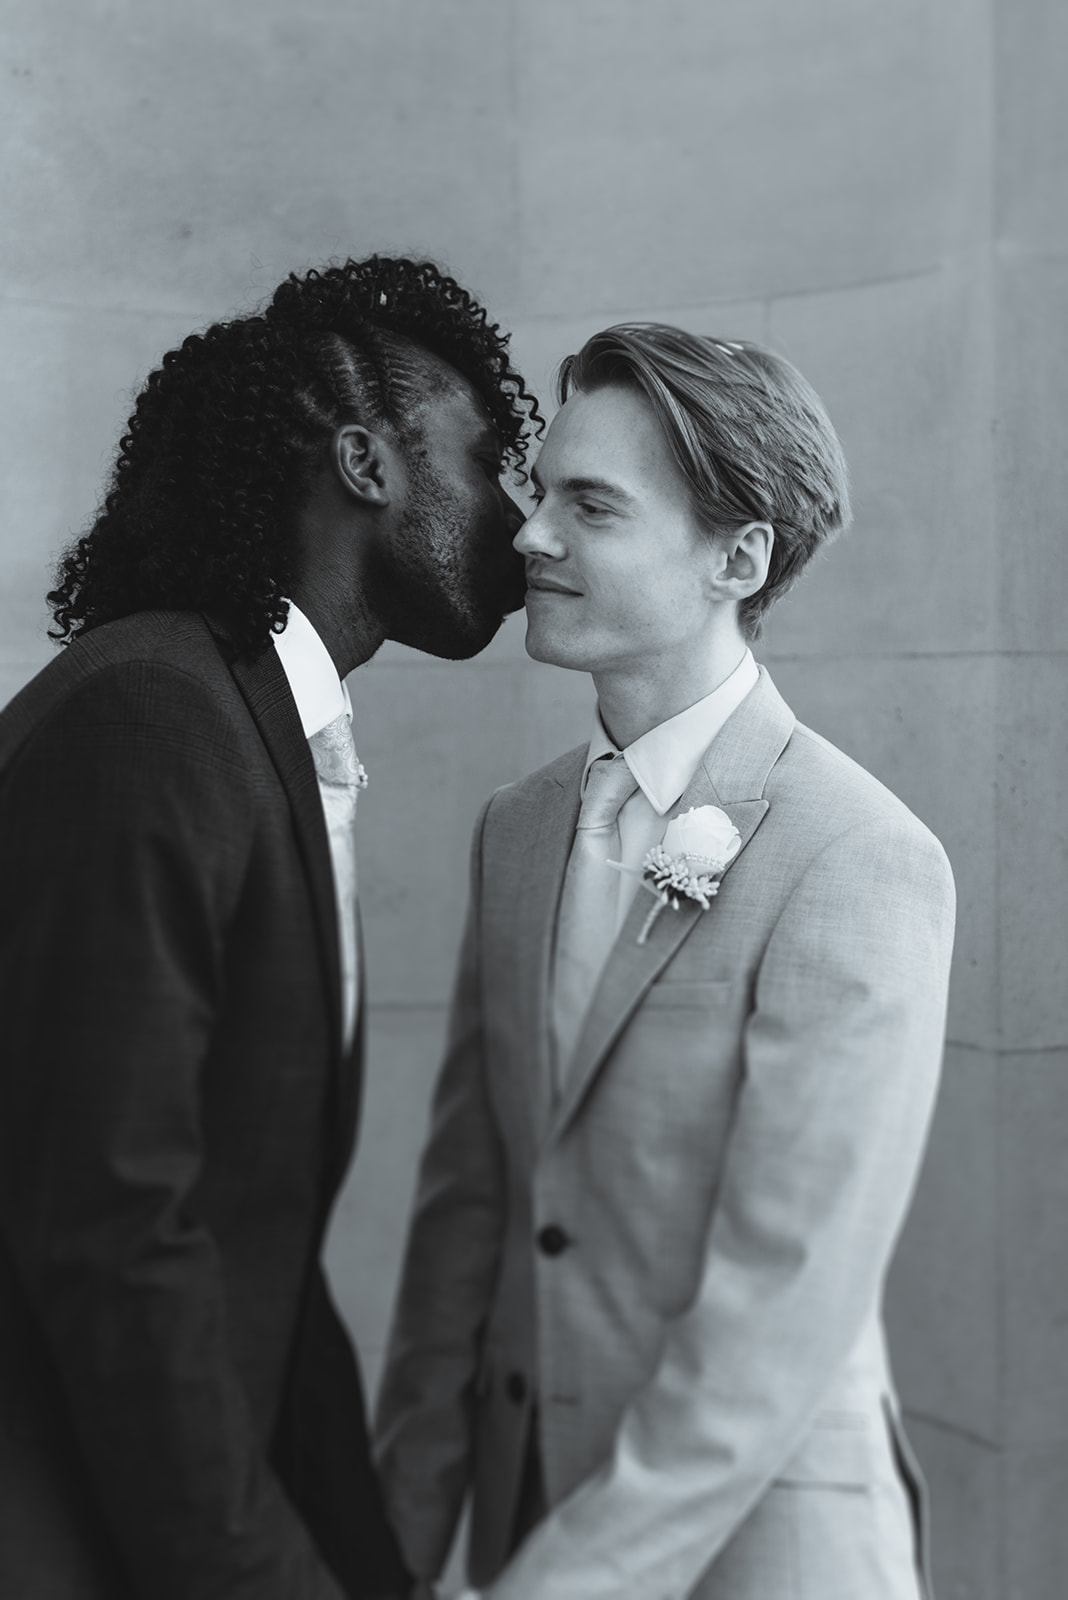 Romantic portrait of Benjamin and Ezekiel kissing at the Marylebone Town Hall